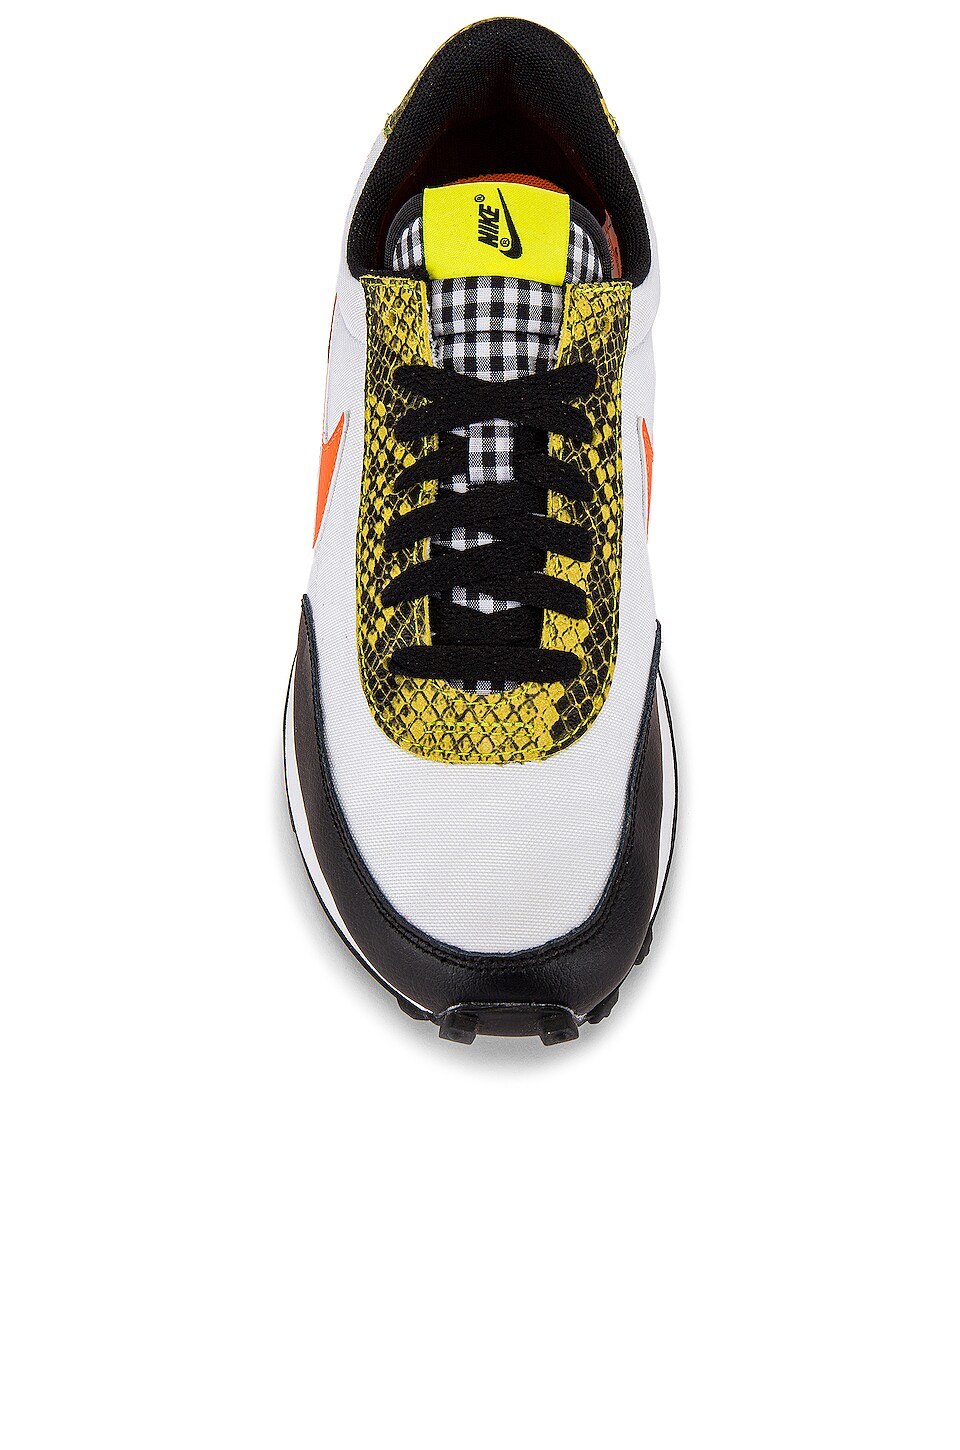 Nike Daybreak Sneaker in Black, Total Orange, Dynamic Yellow & White